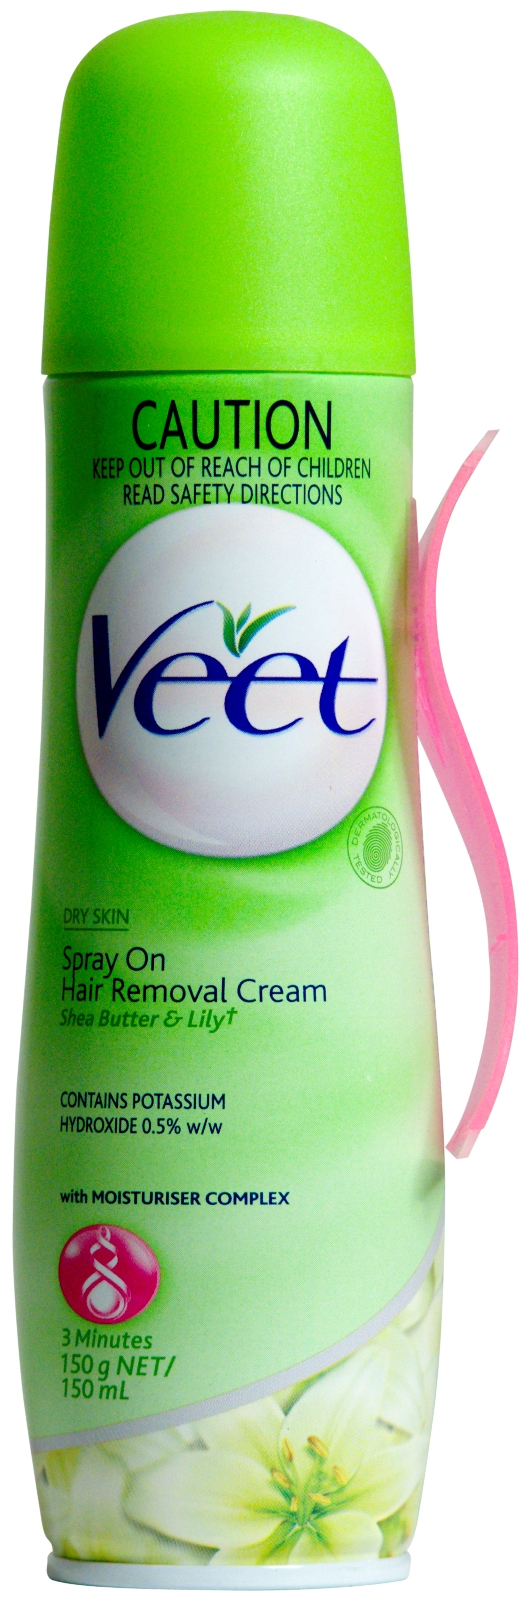 Veet Easy Spray On Hair Removal Cream Dry